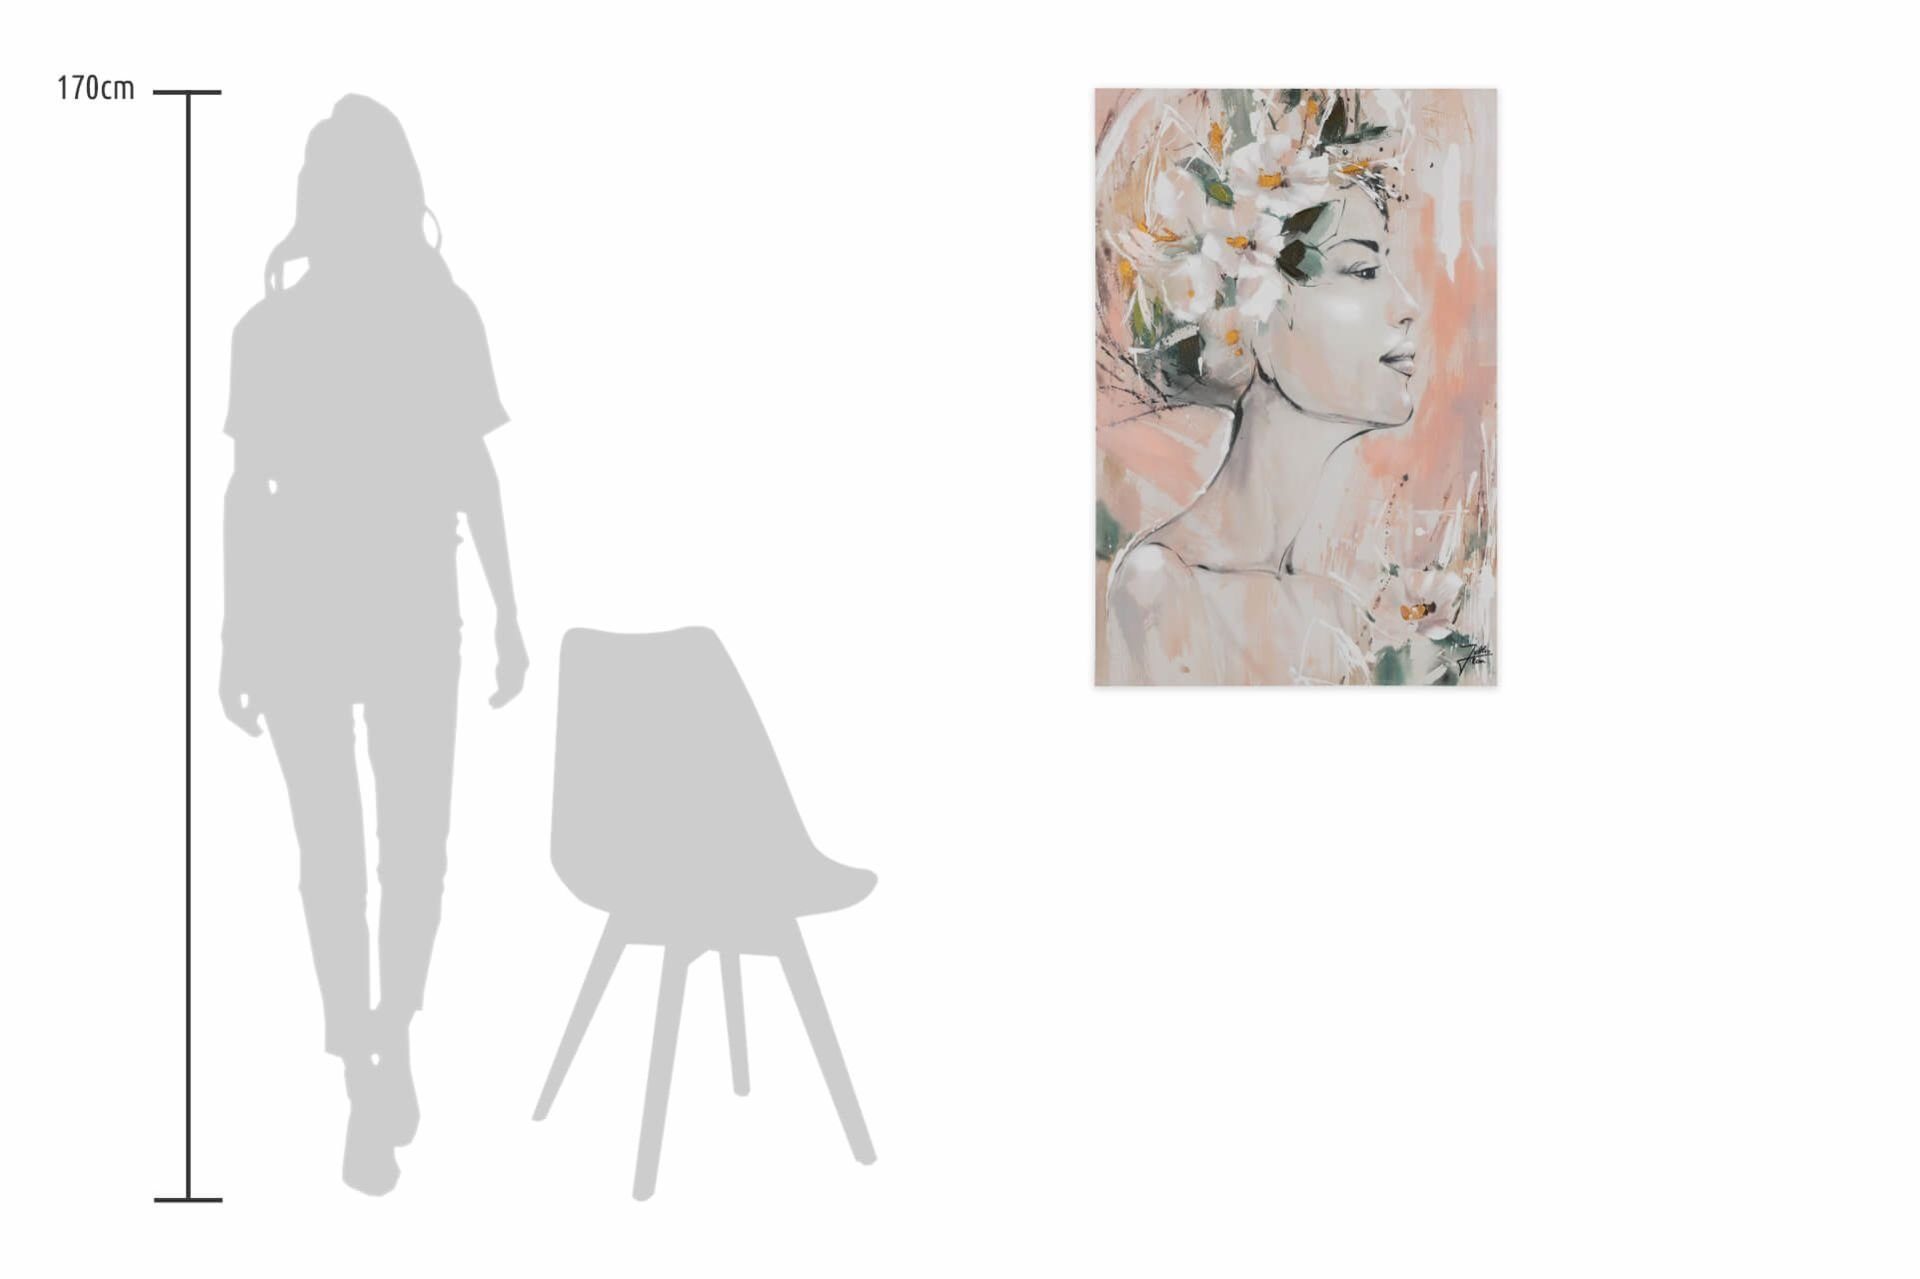 der Fest Wohnzimmer Wandbild Leinwandbild HANDGEMALT 100% KUNSTLOFT Gemälde cm, Blüten 60x90